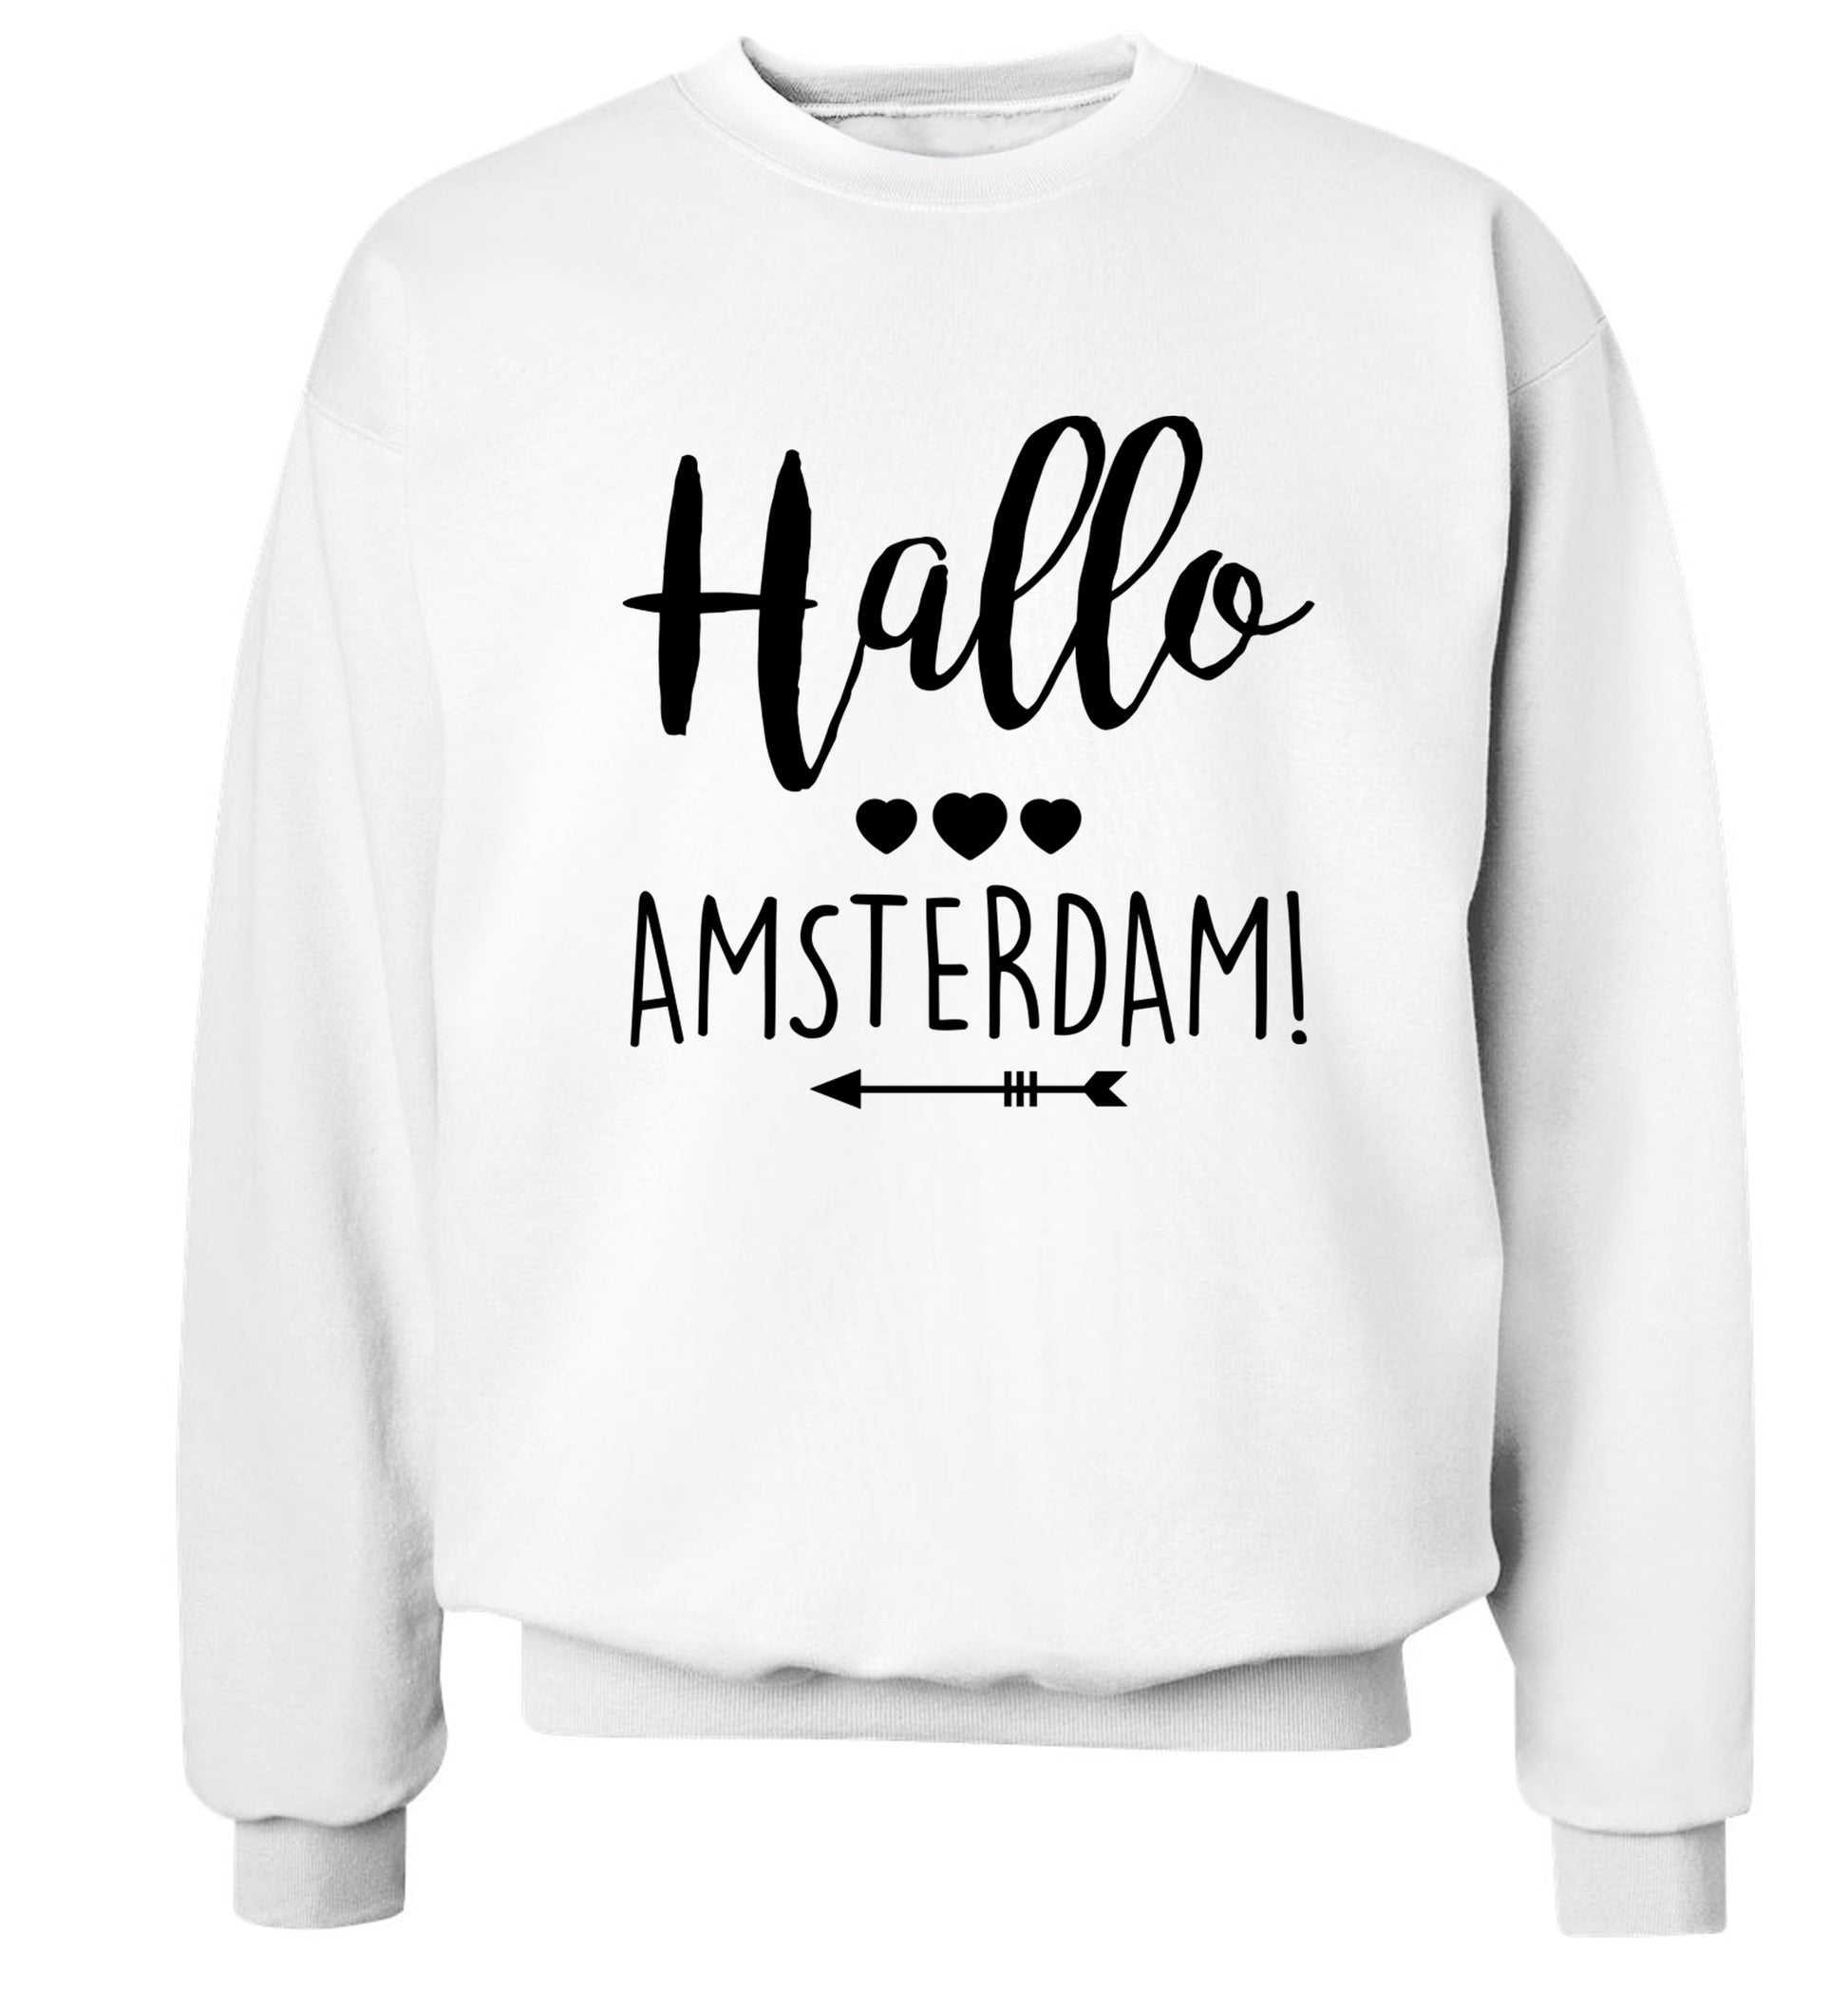 Hallo Amsterdam Adult's unisex white Sweater 2XL